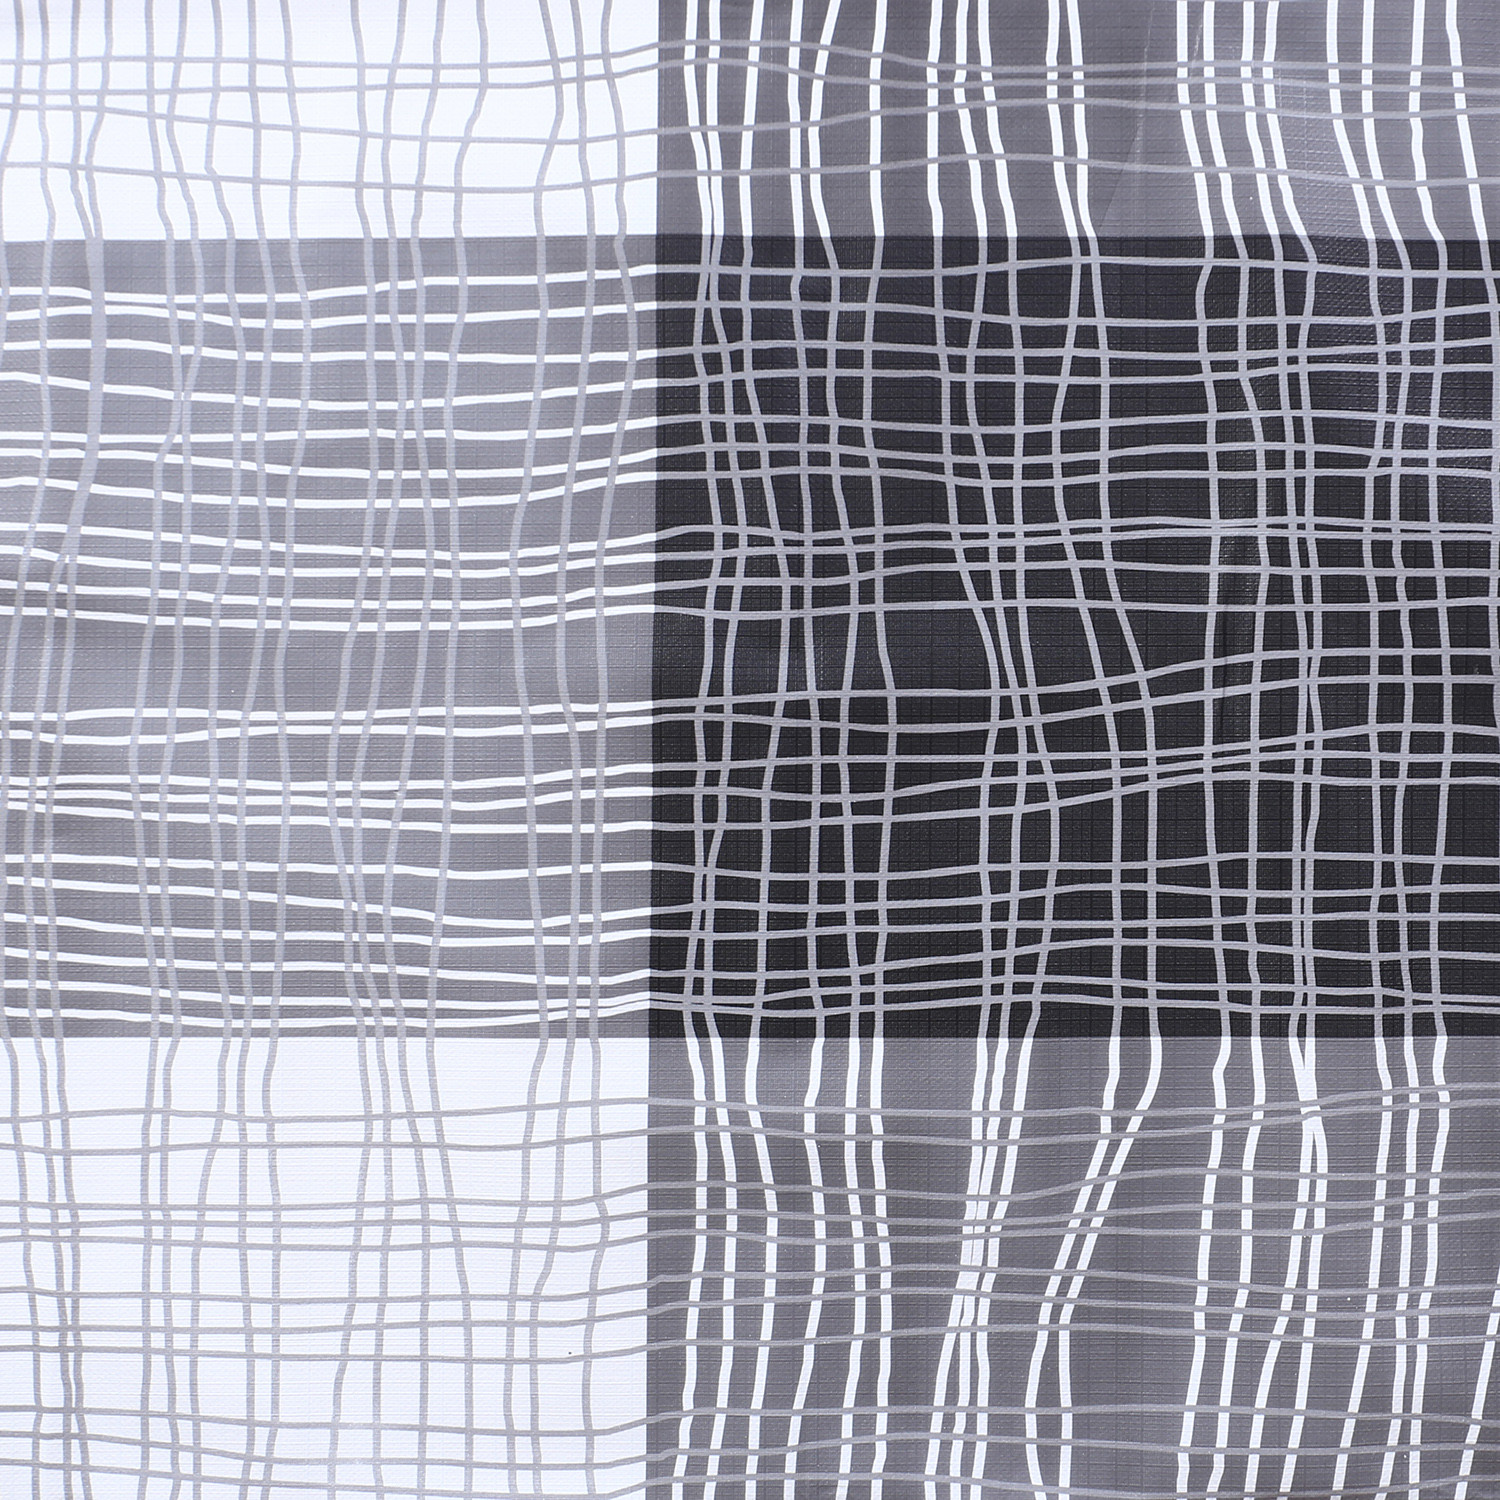 Kuber Industries Shelf Mat|Waterproof Strips Print PVC Anti-Slip Sheets|Durable Kitchen Cabinet Drawer Shelf Liner,10 Meter,(Gray)